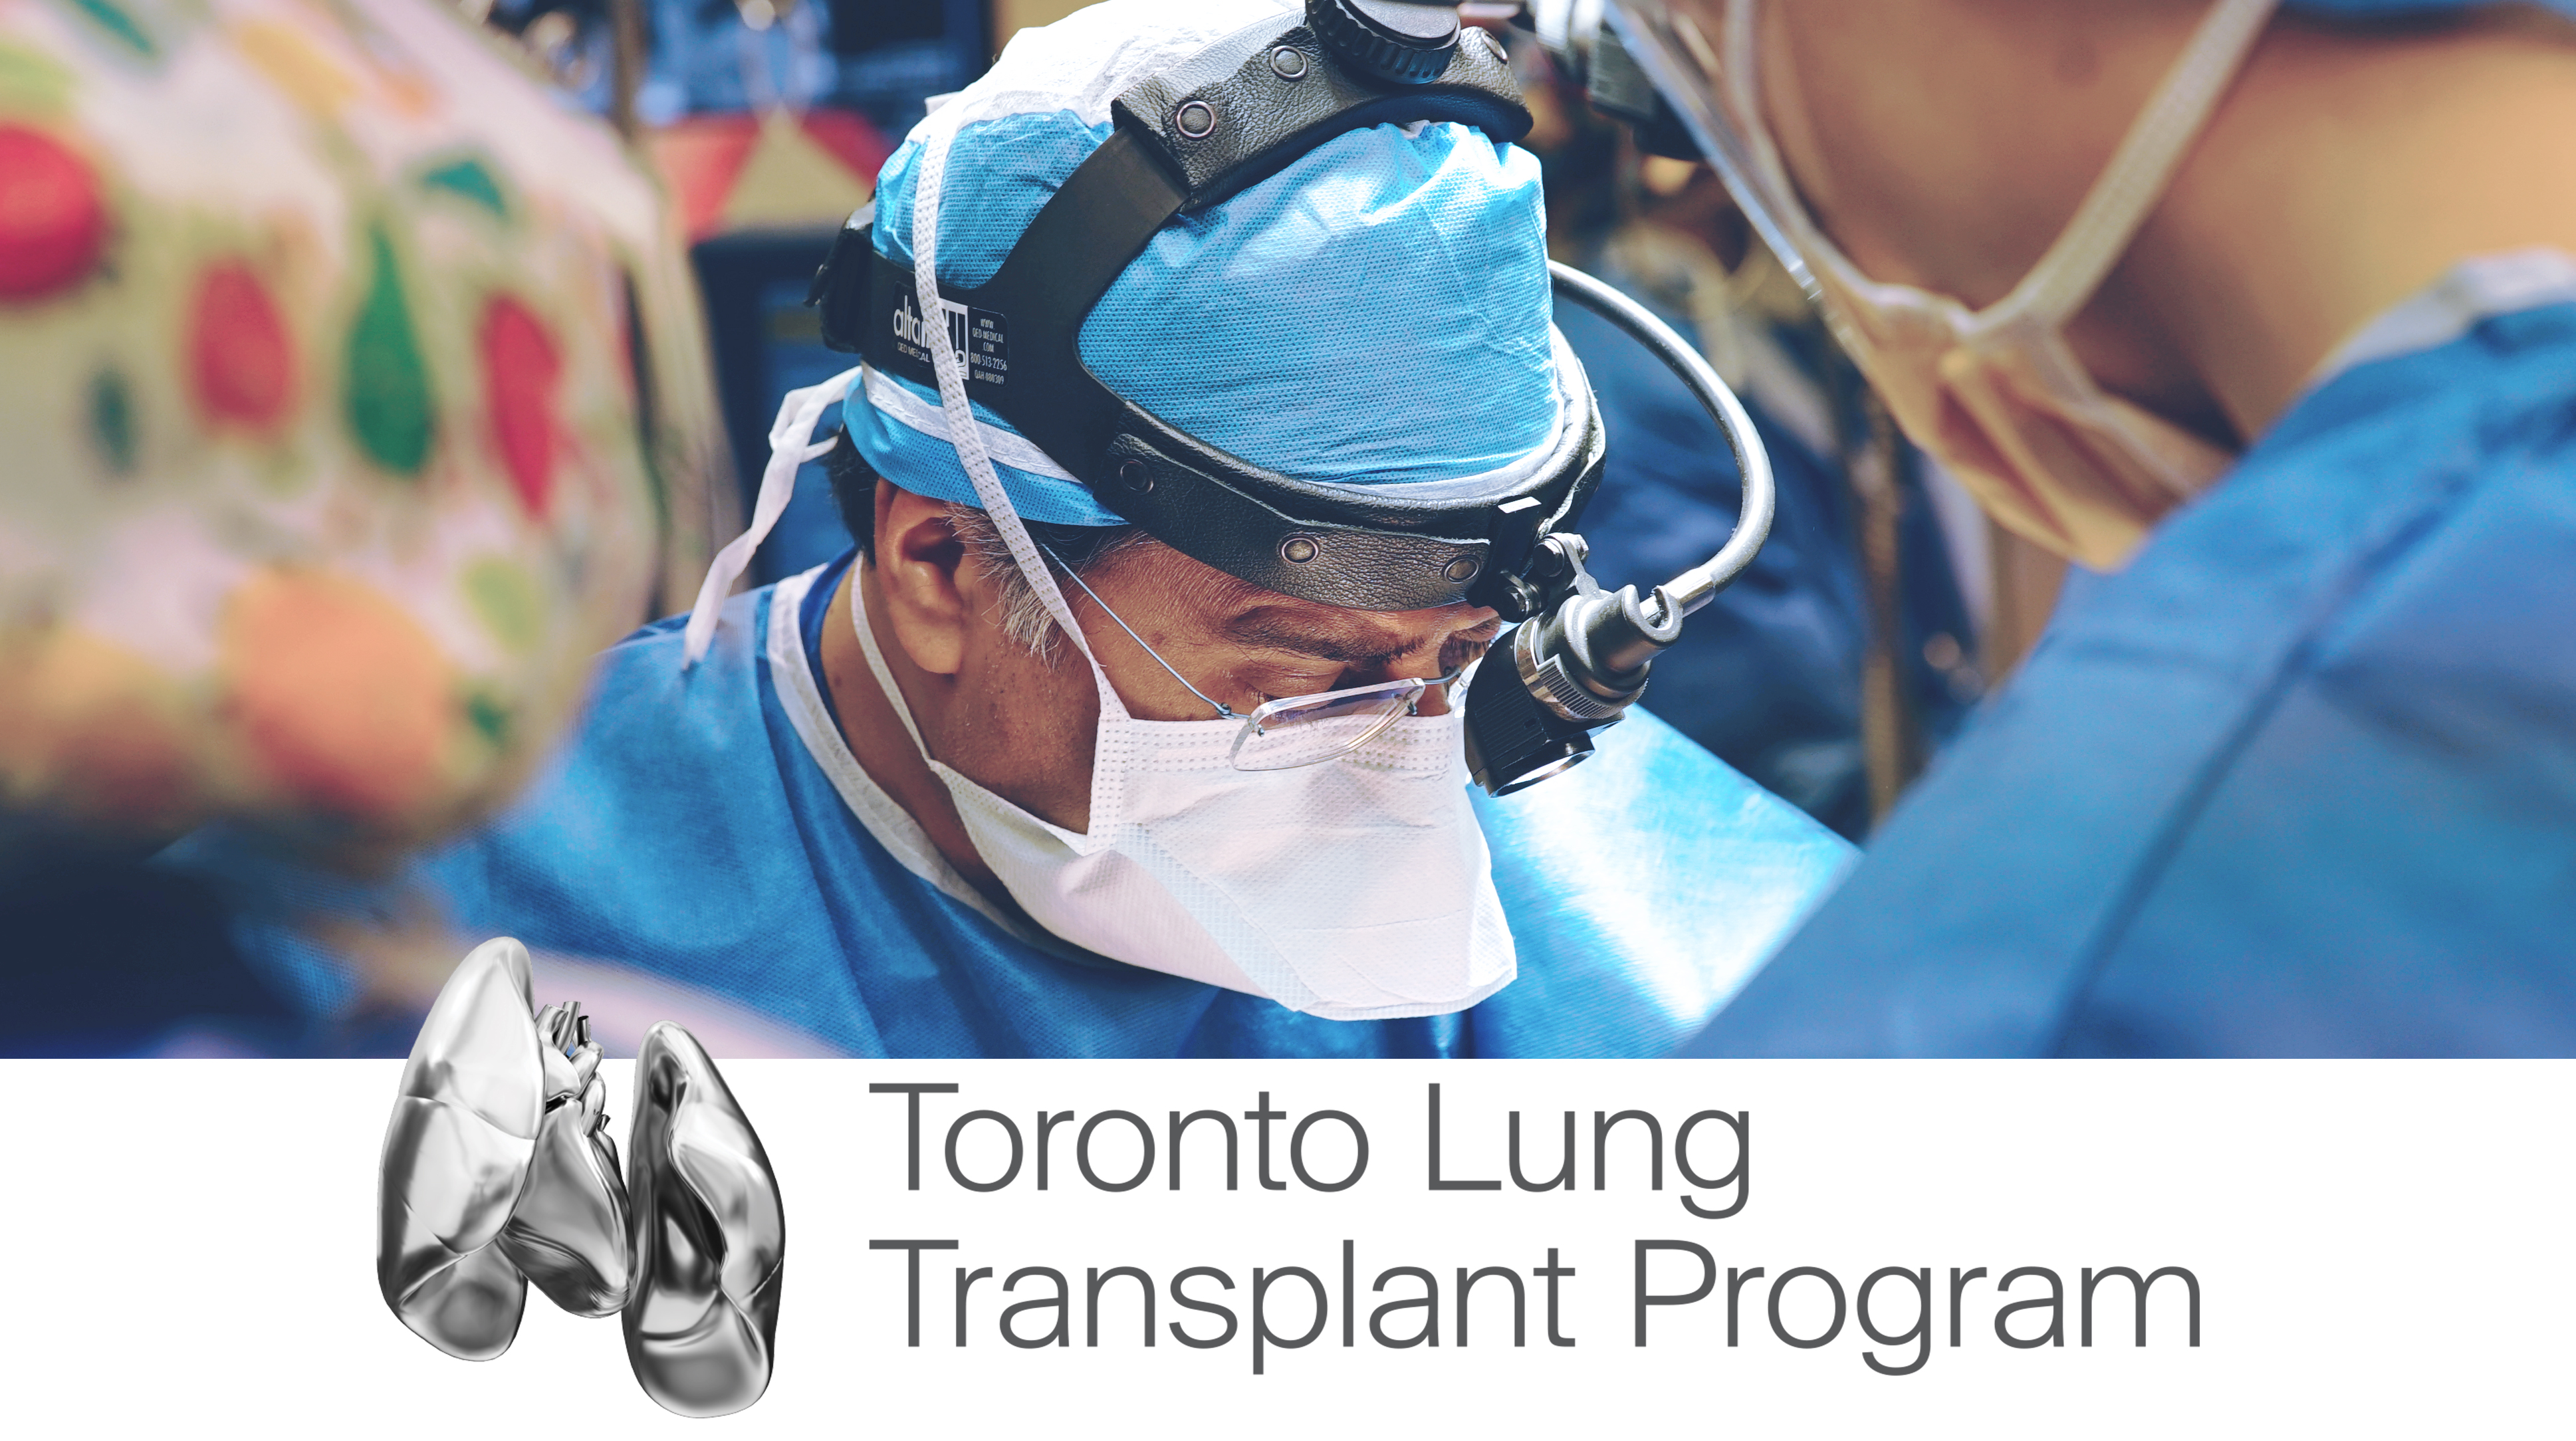 Toronto Lung Transplant Program logo